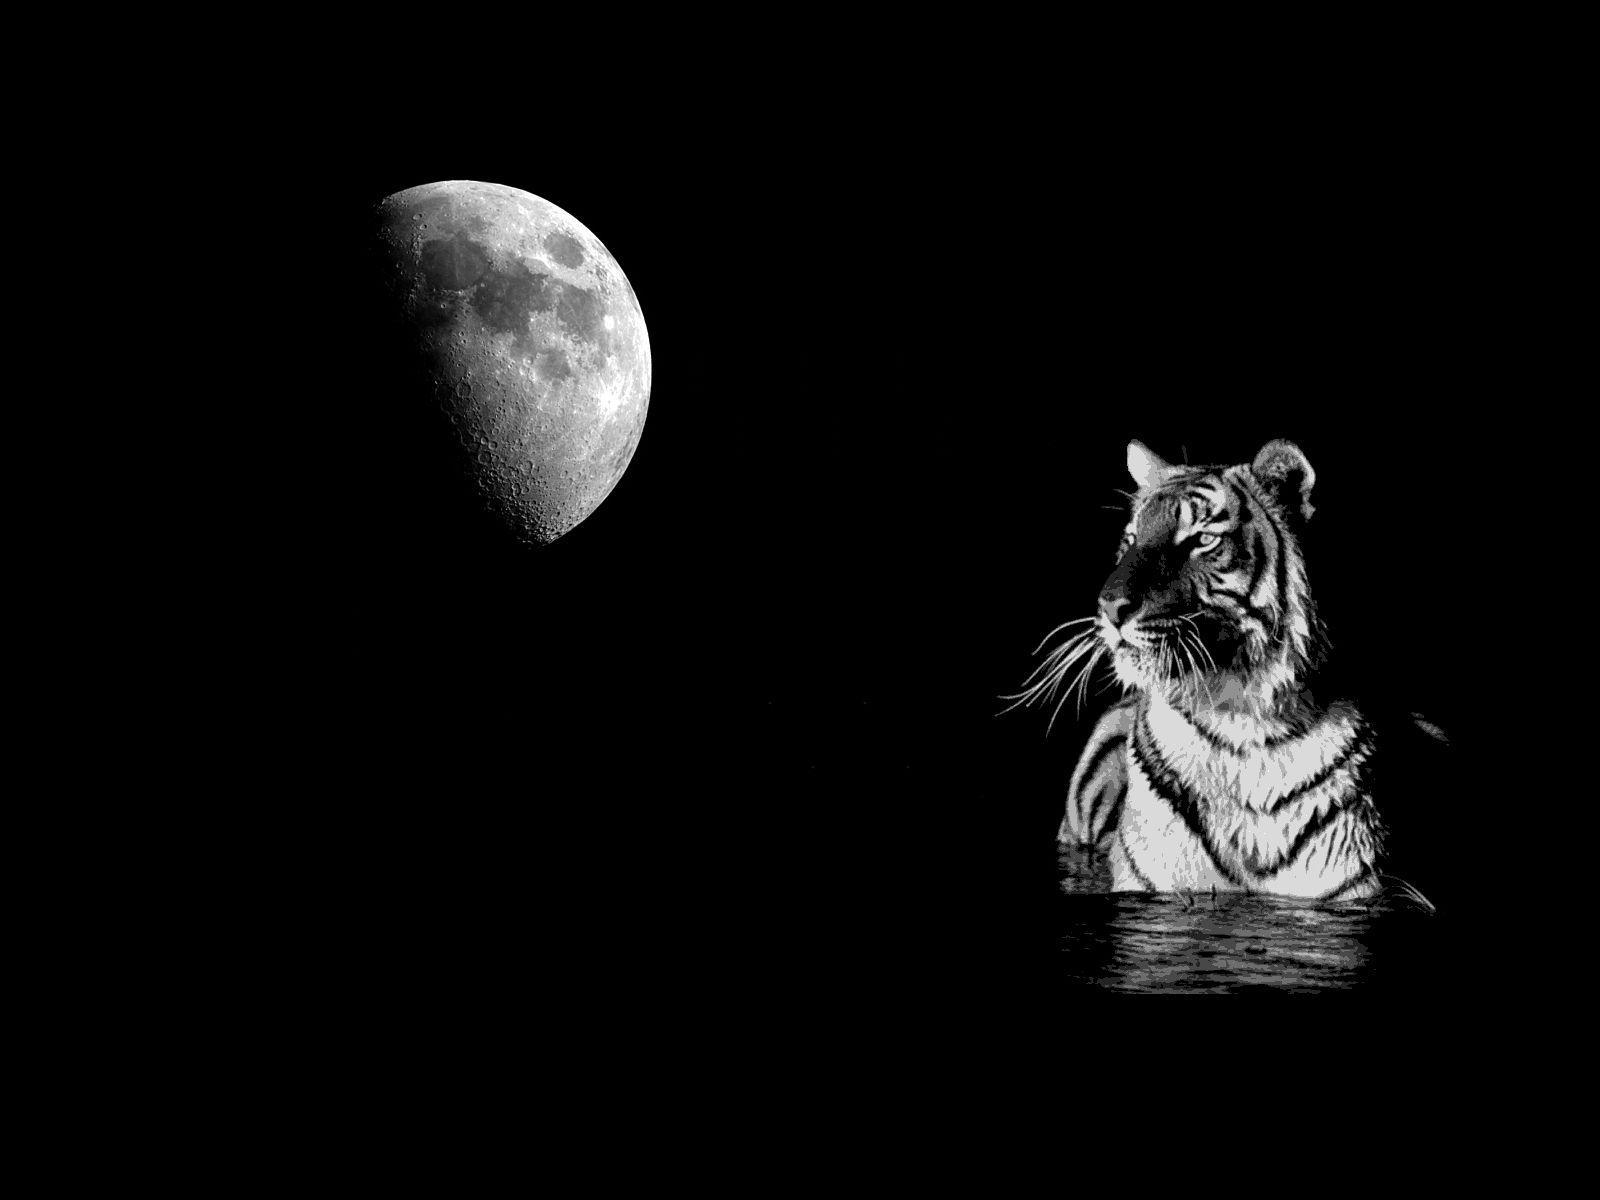 Black Tiger Wallpaper, Fantastic HDQ Black Tiger Image